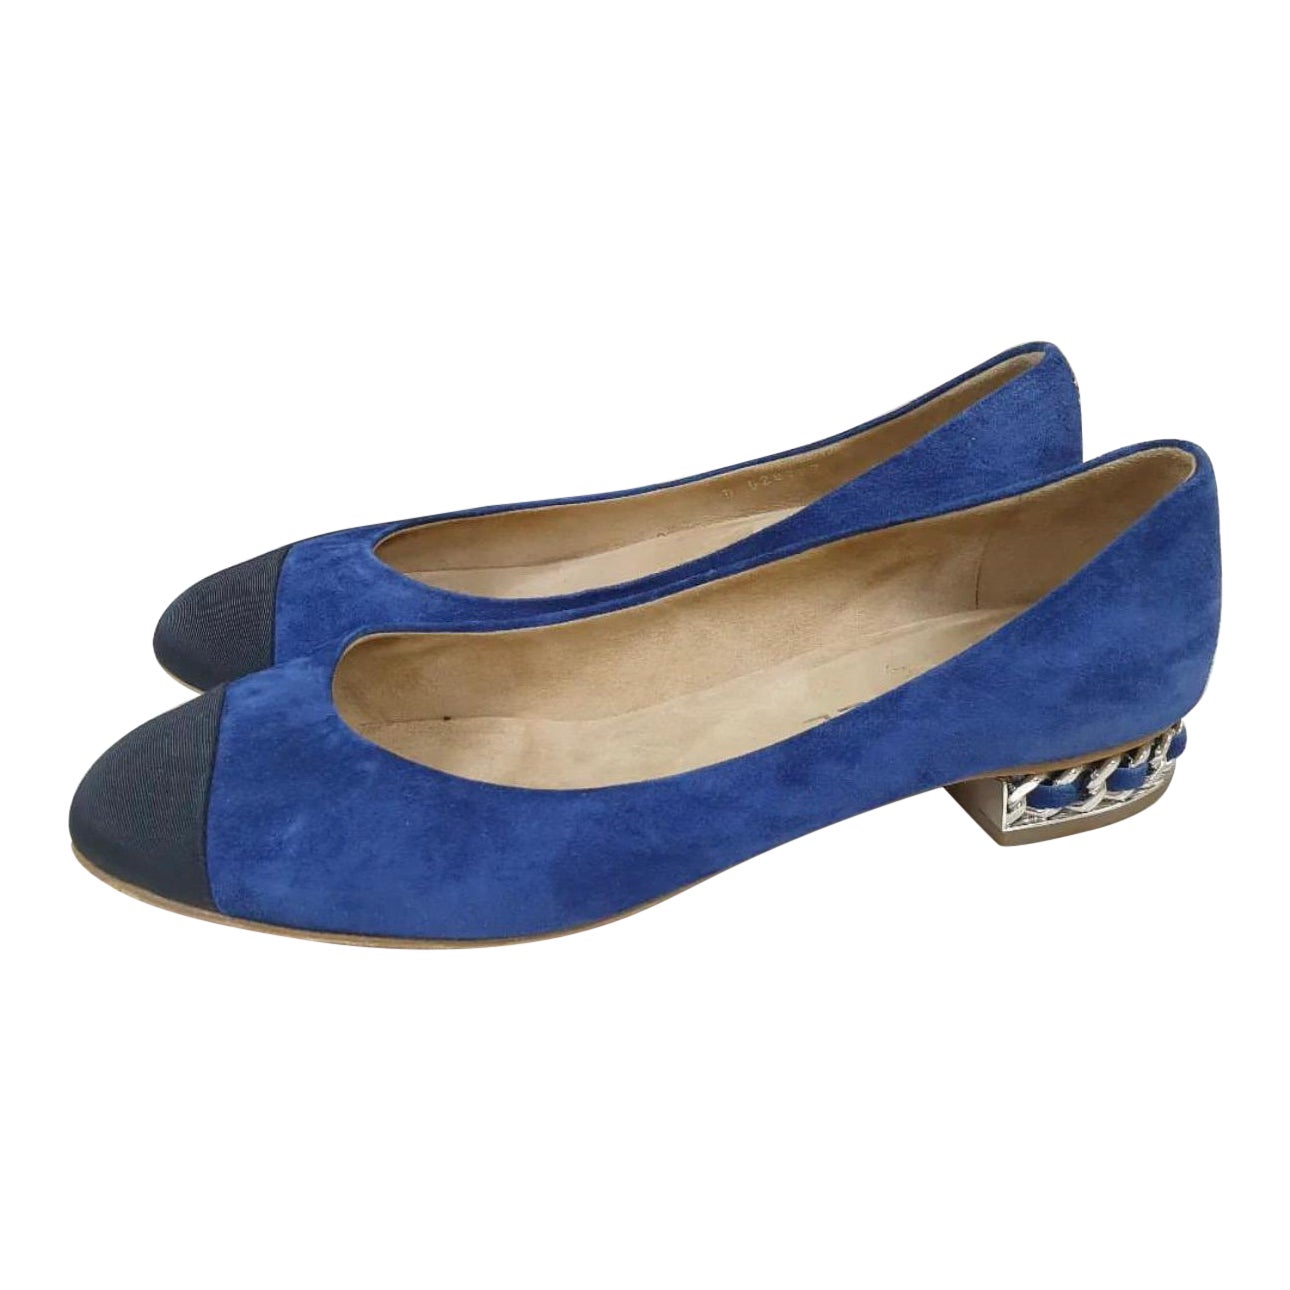 CHANEL Black Toe Blue Suede Ballet Flats Shoe